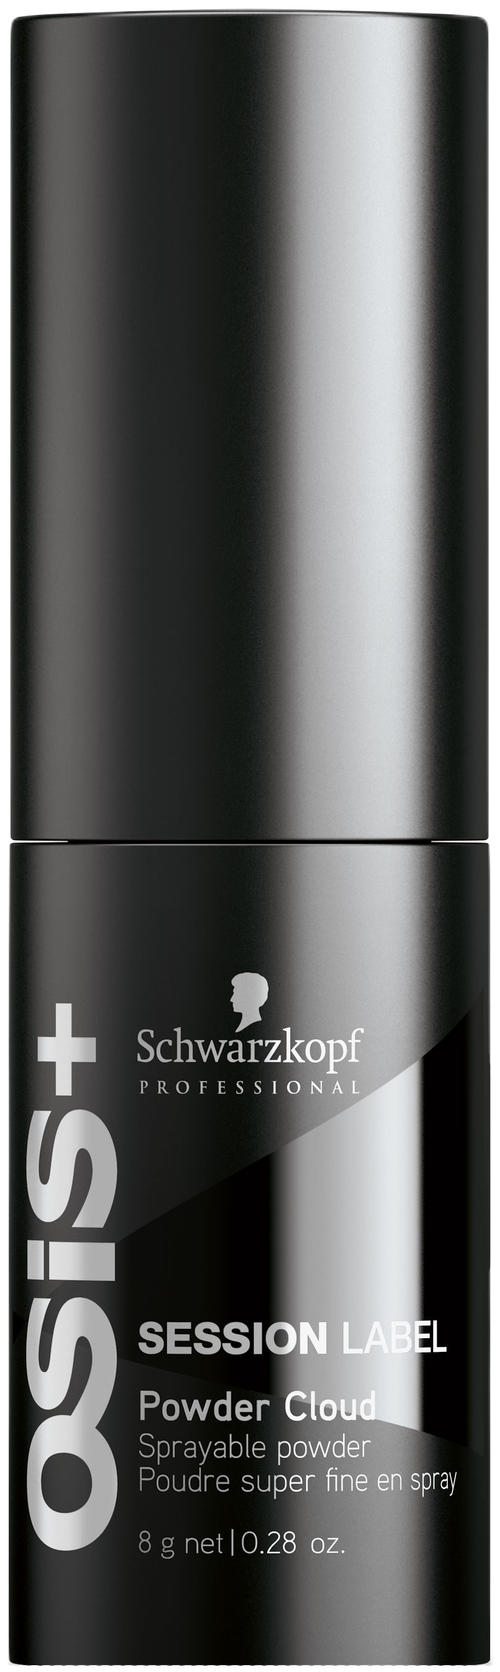 Schwarzkopf Professional спрей-пудра Session Label Powder Cloud, 8 г